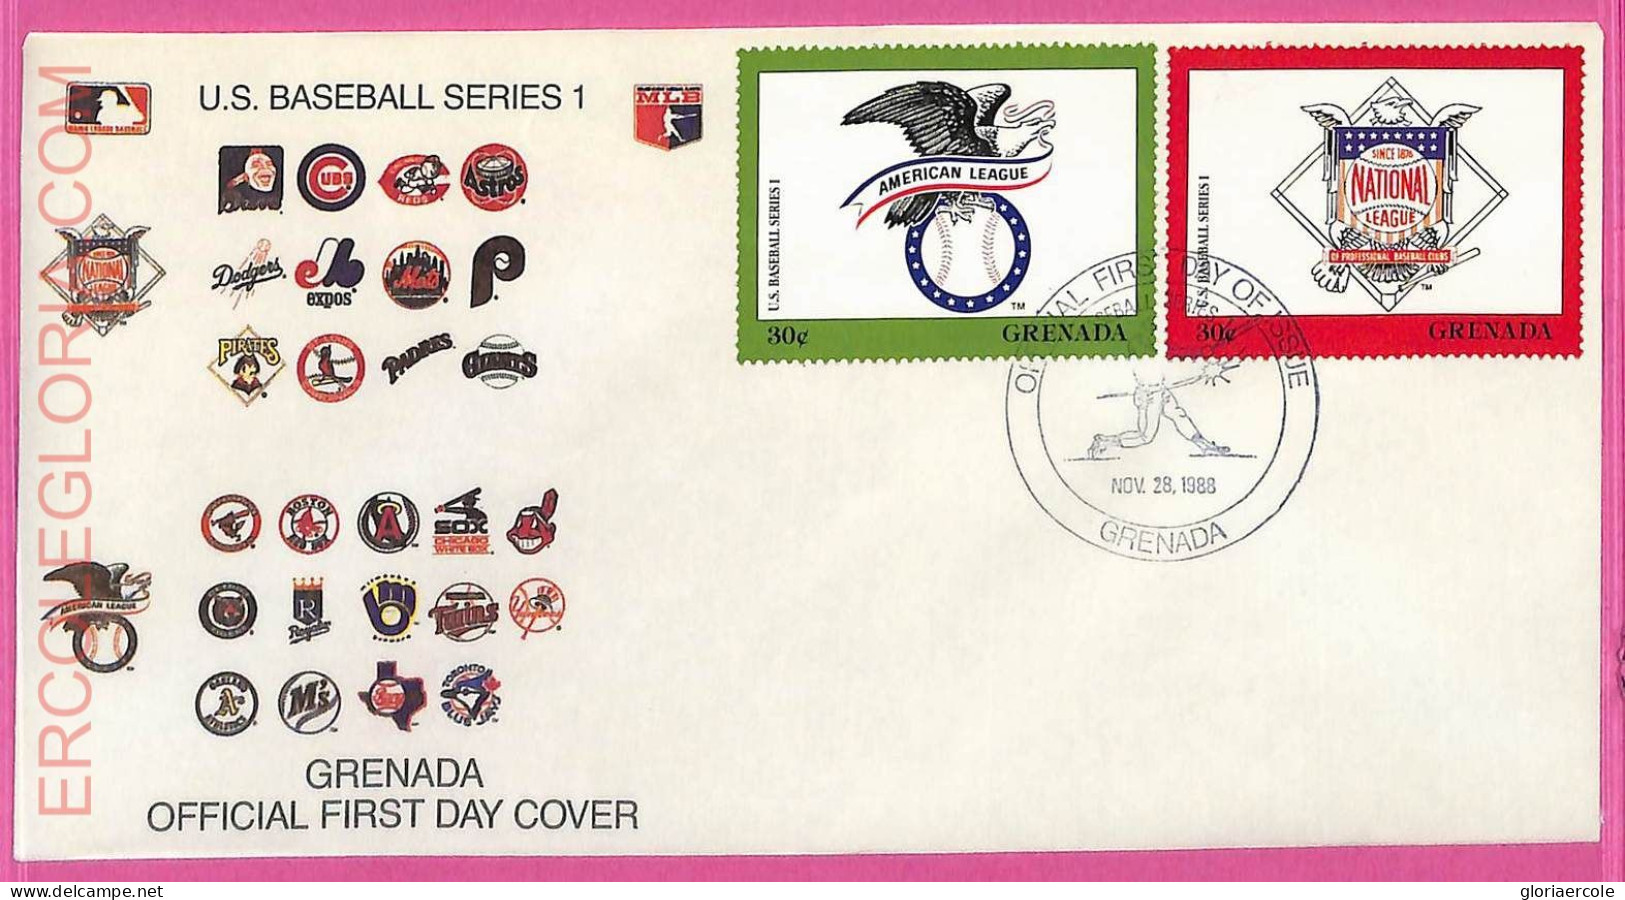 Ag1598 - GRENADA - Postal History - FDC COVER + Stamps On Card - 1988 BASEBALL - Baseball